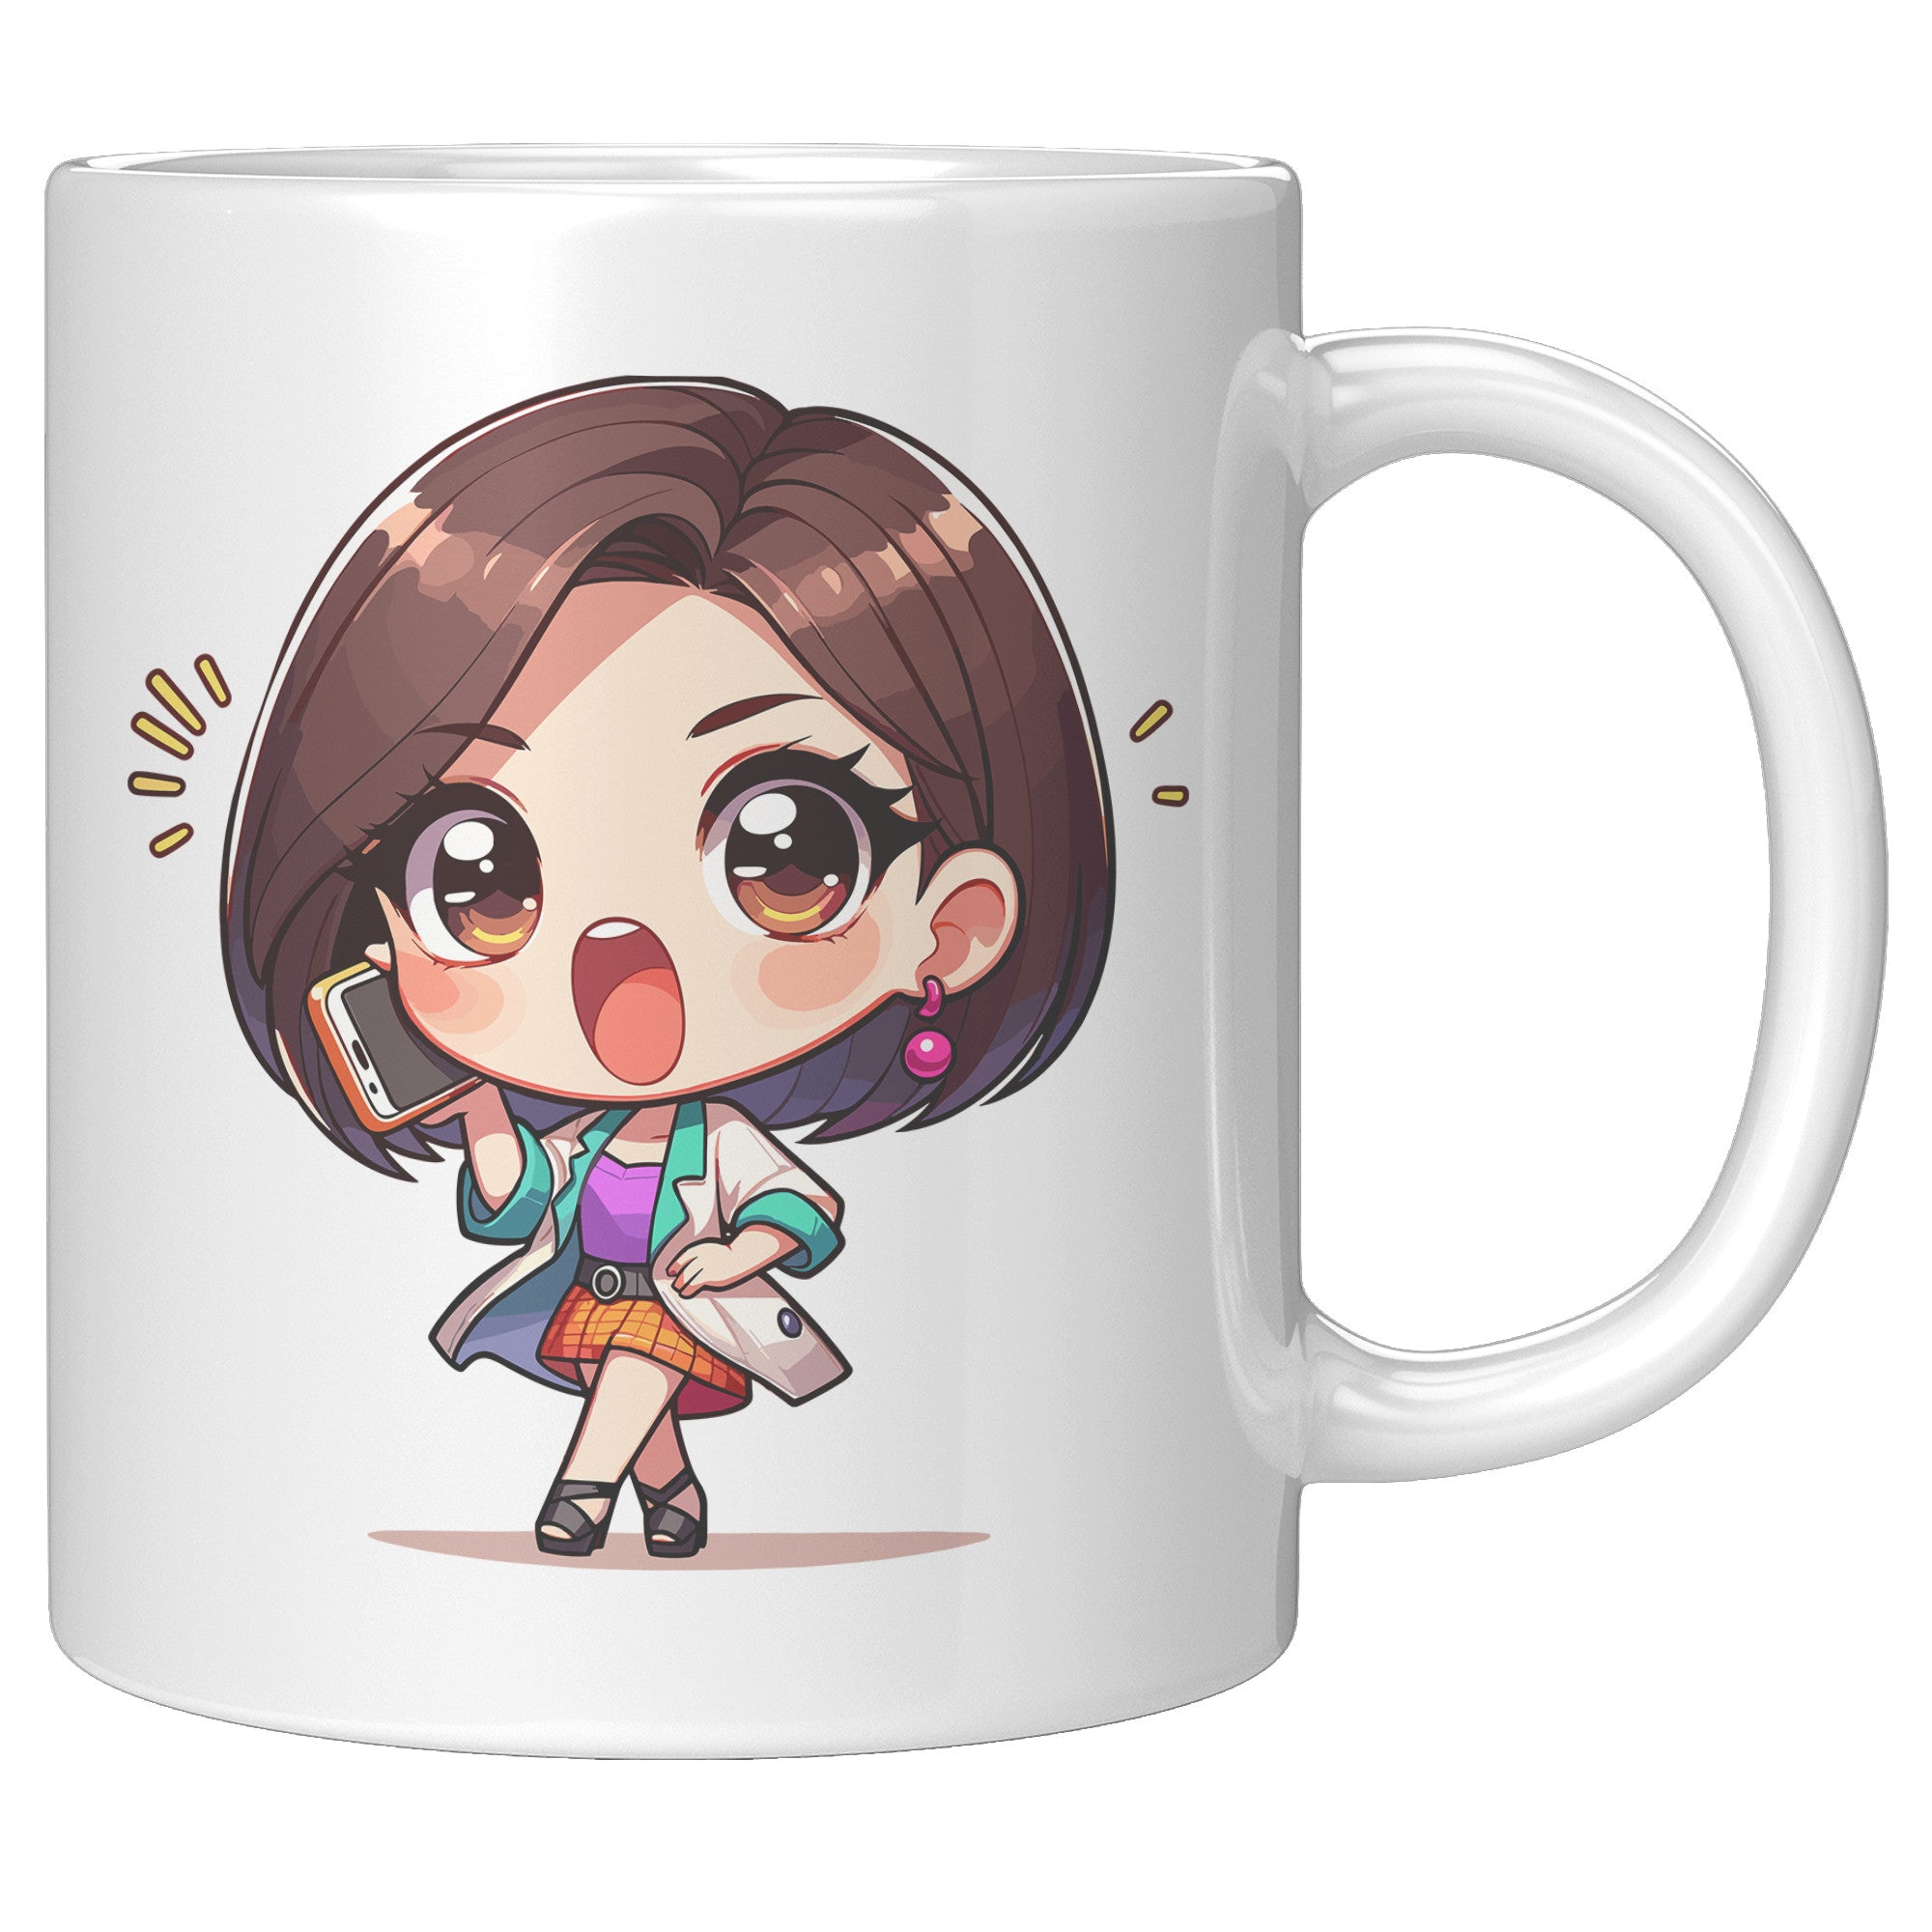 "Marites Gossip Queen Coffee Mug - Cute Cartoon 'Ano Ang Latest?' Cup - Perfect Chismosa Gift - Filipino Slang Tea Mug" - NNN